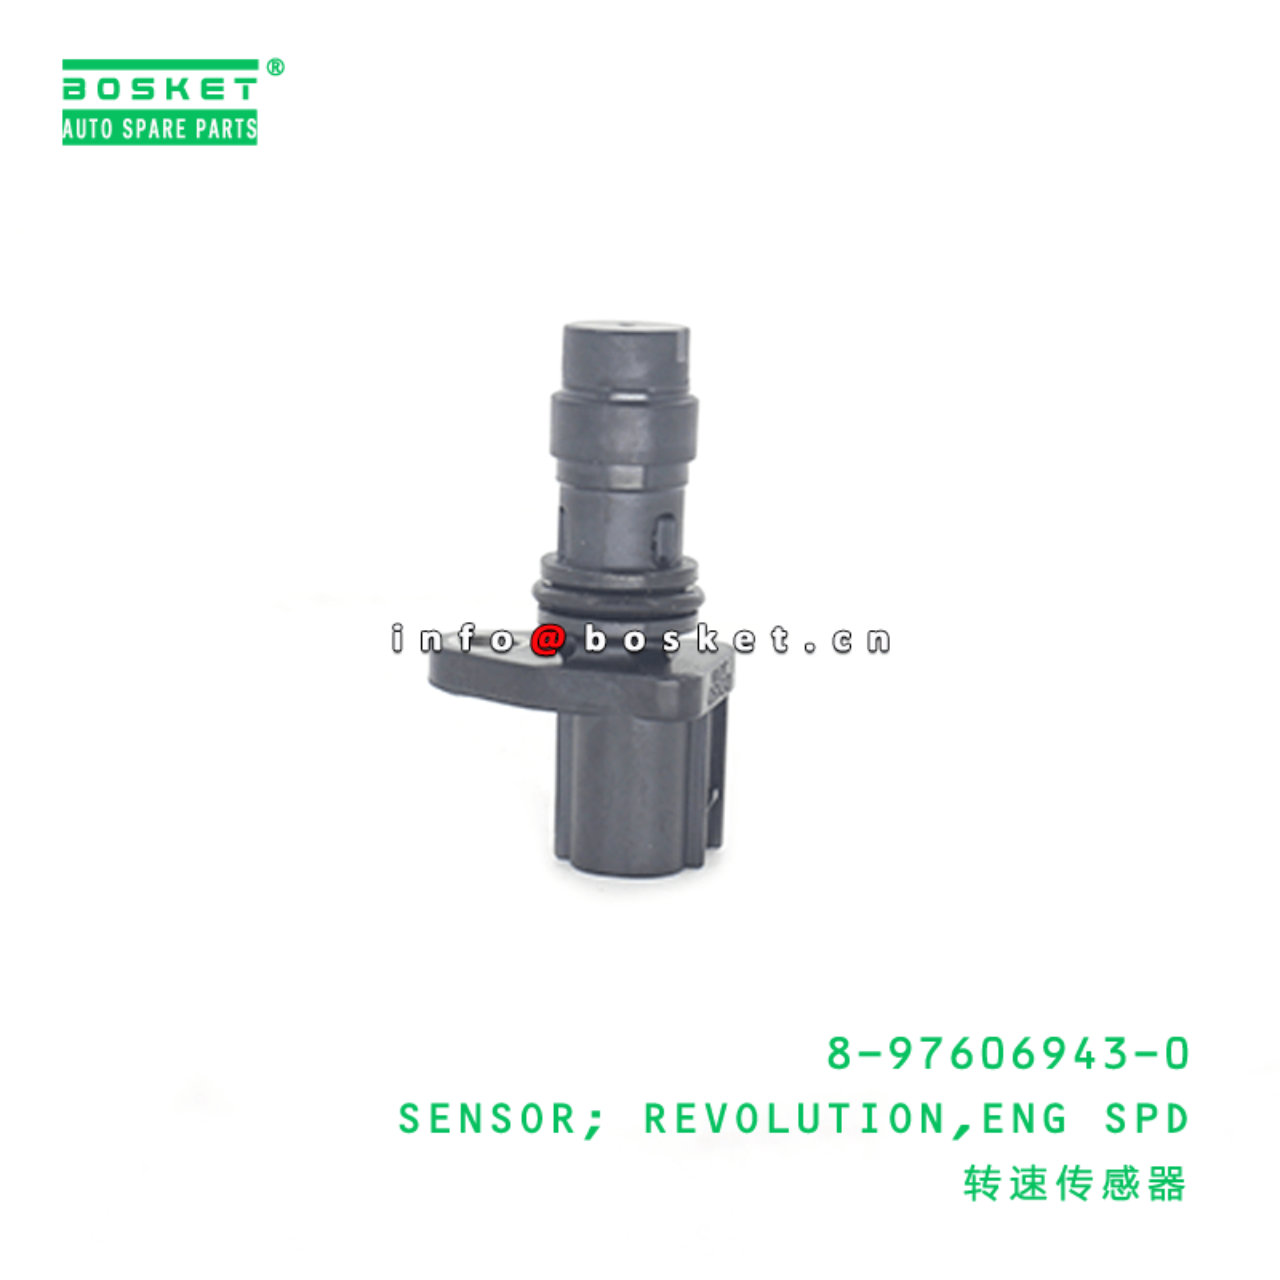 8-97606943-0 Engine Speed Revolution Sensor 8976069430 Suitable for ISUZU ELF 4HK1